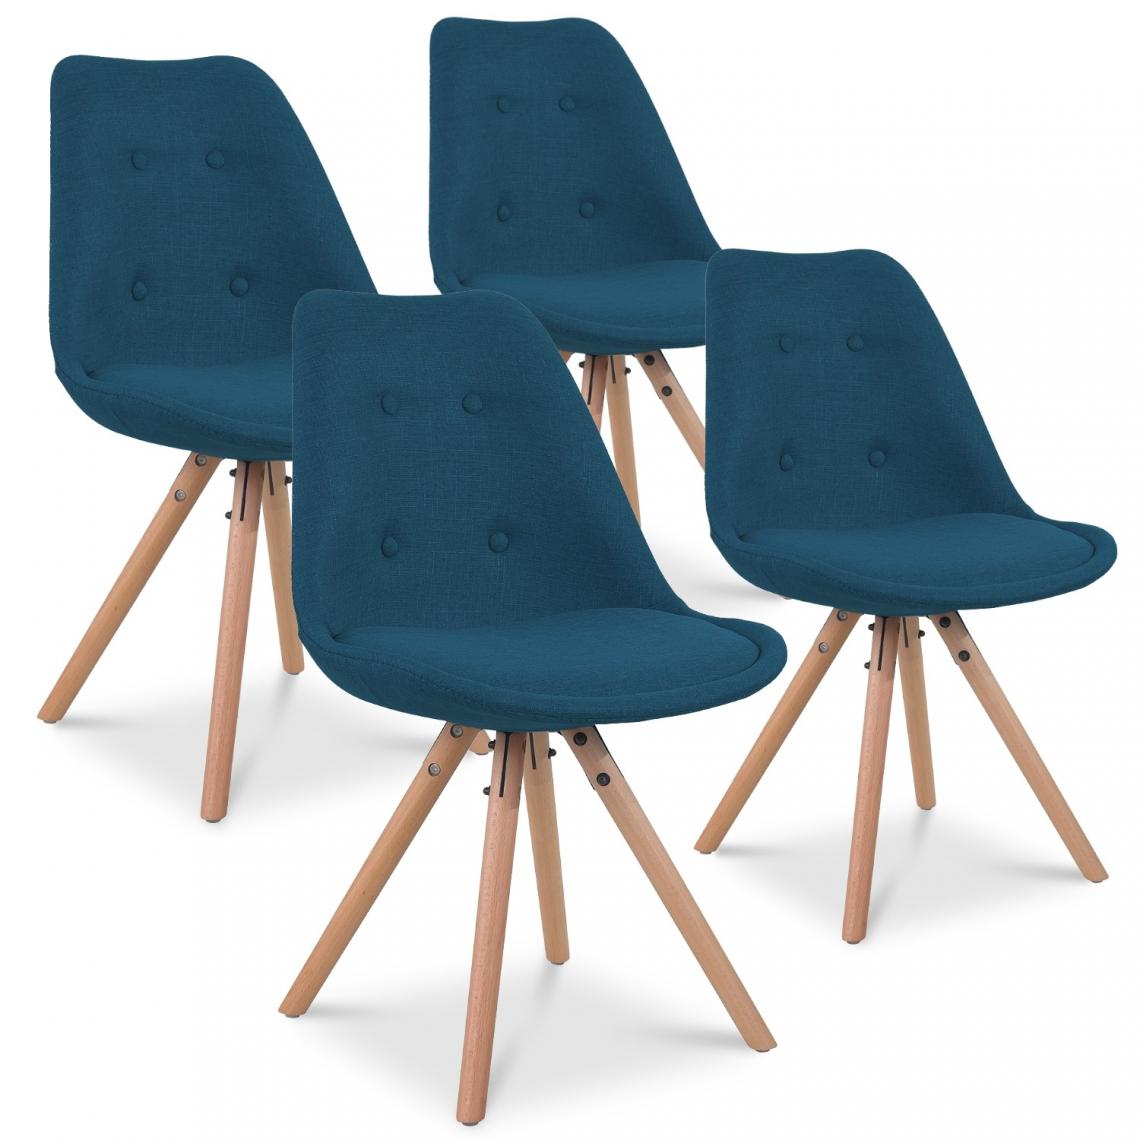 marque generique - Lot de 4 chaises scandinaves Frida tissu bleu canard - Chaises